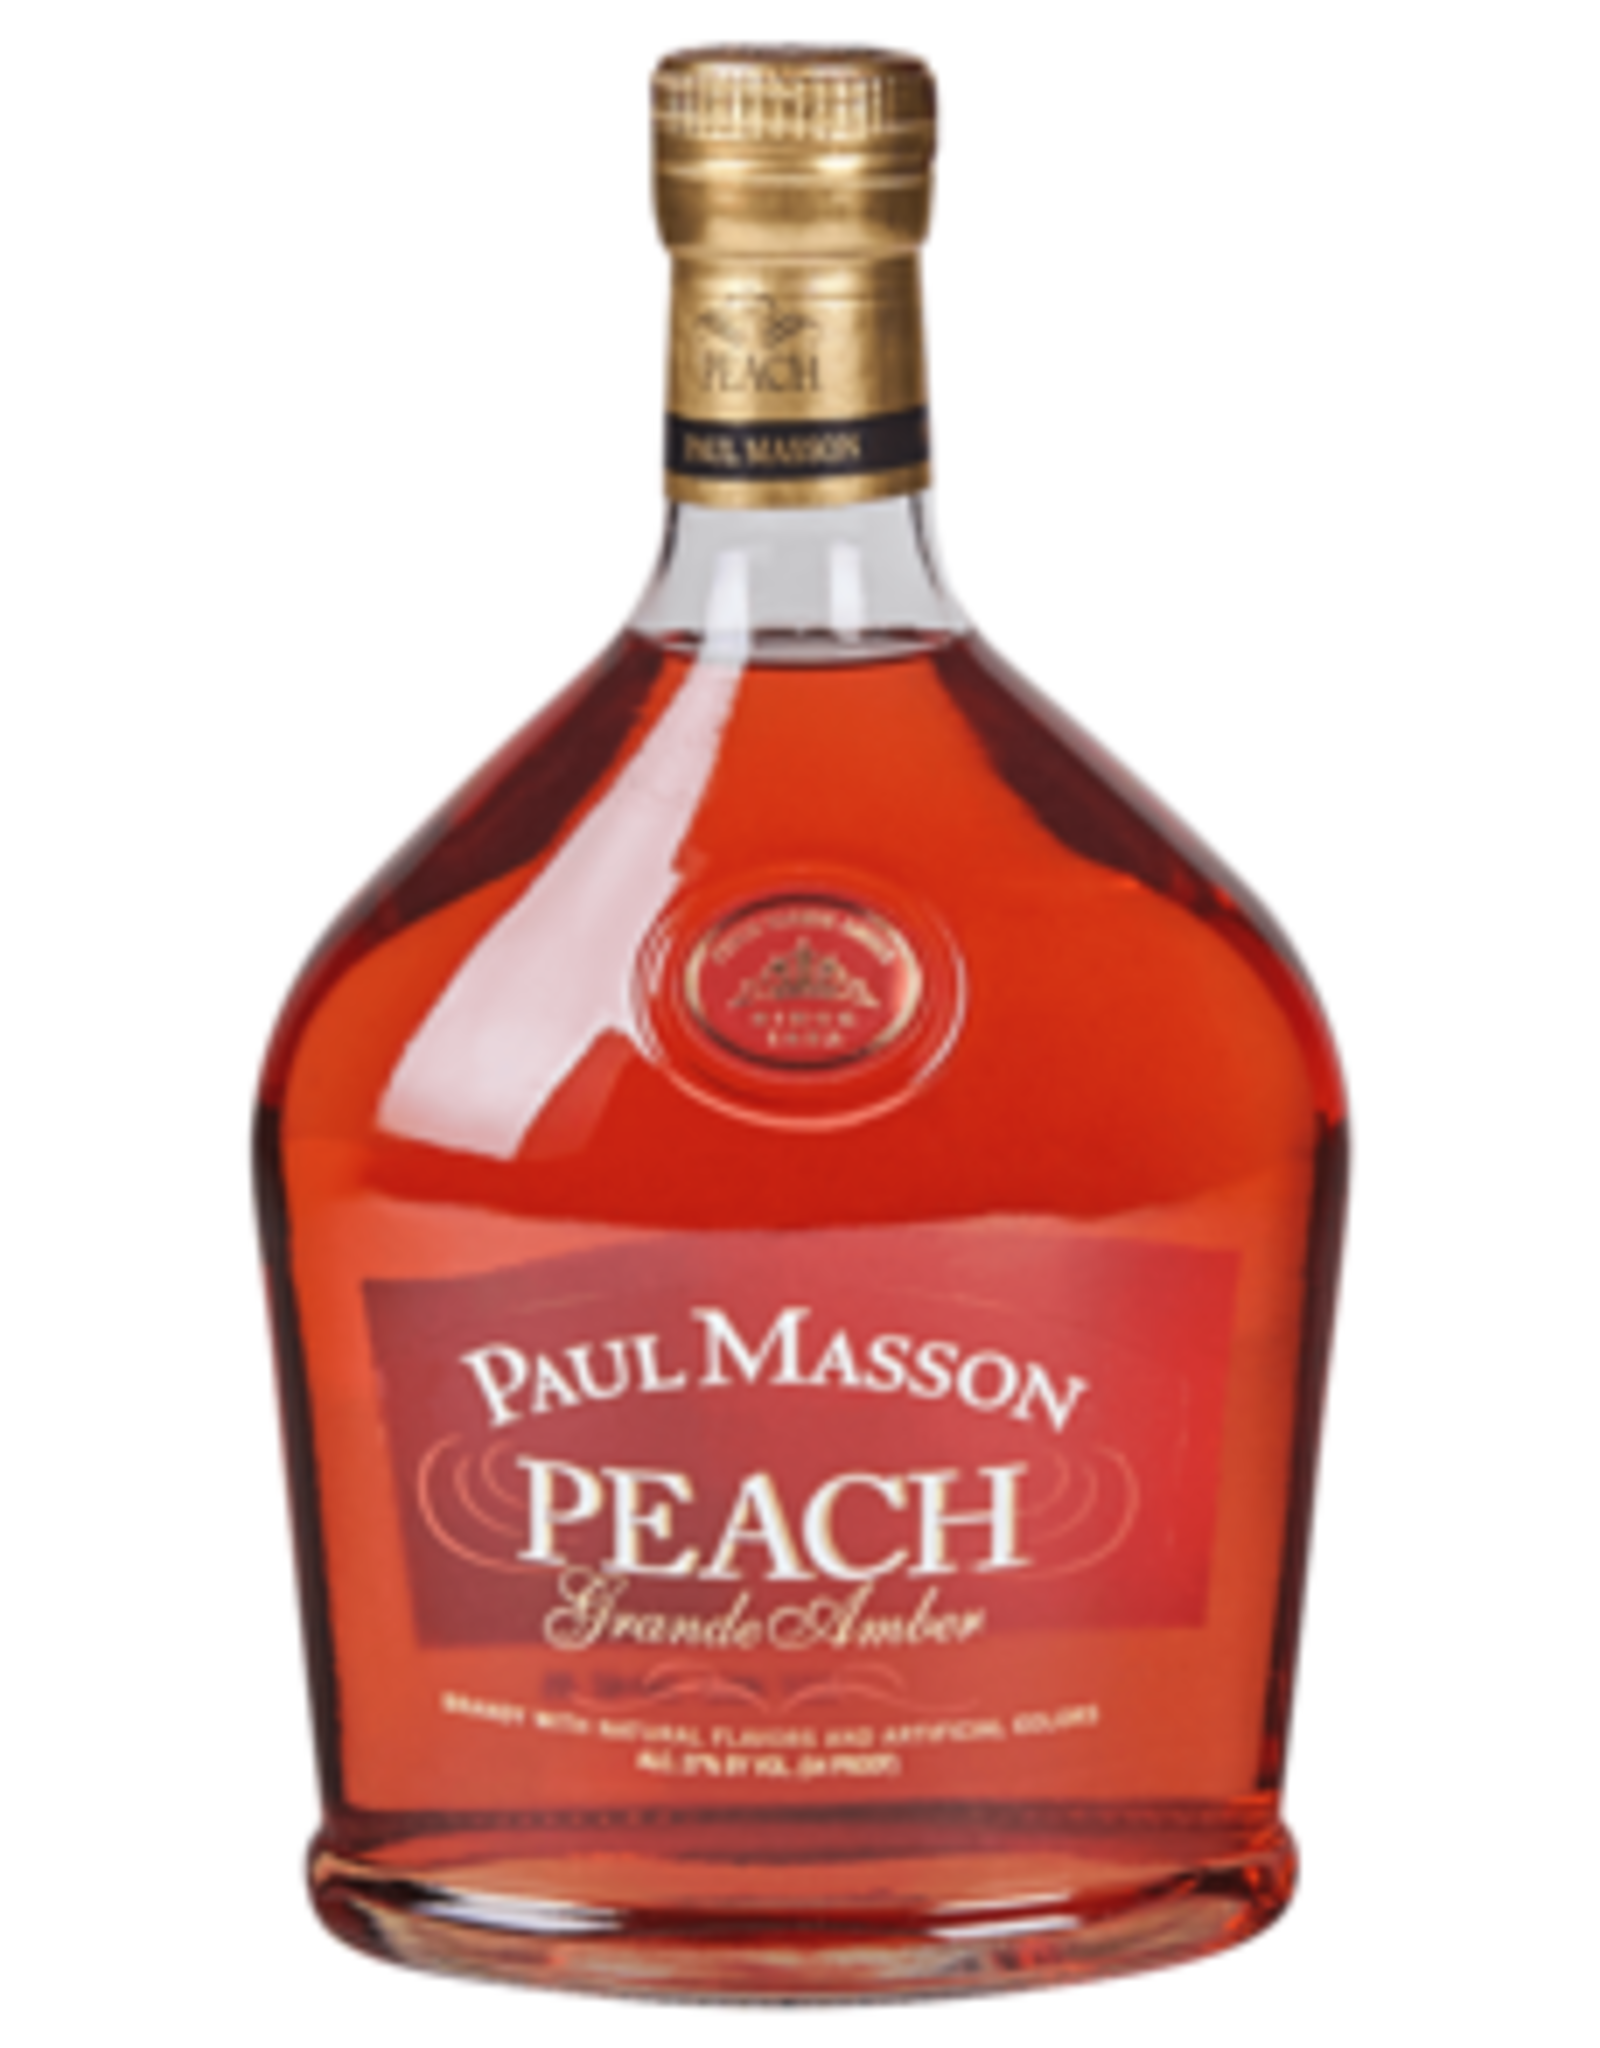 Paul Masson Paul Masson Peach